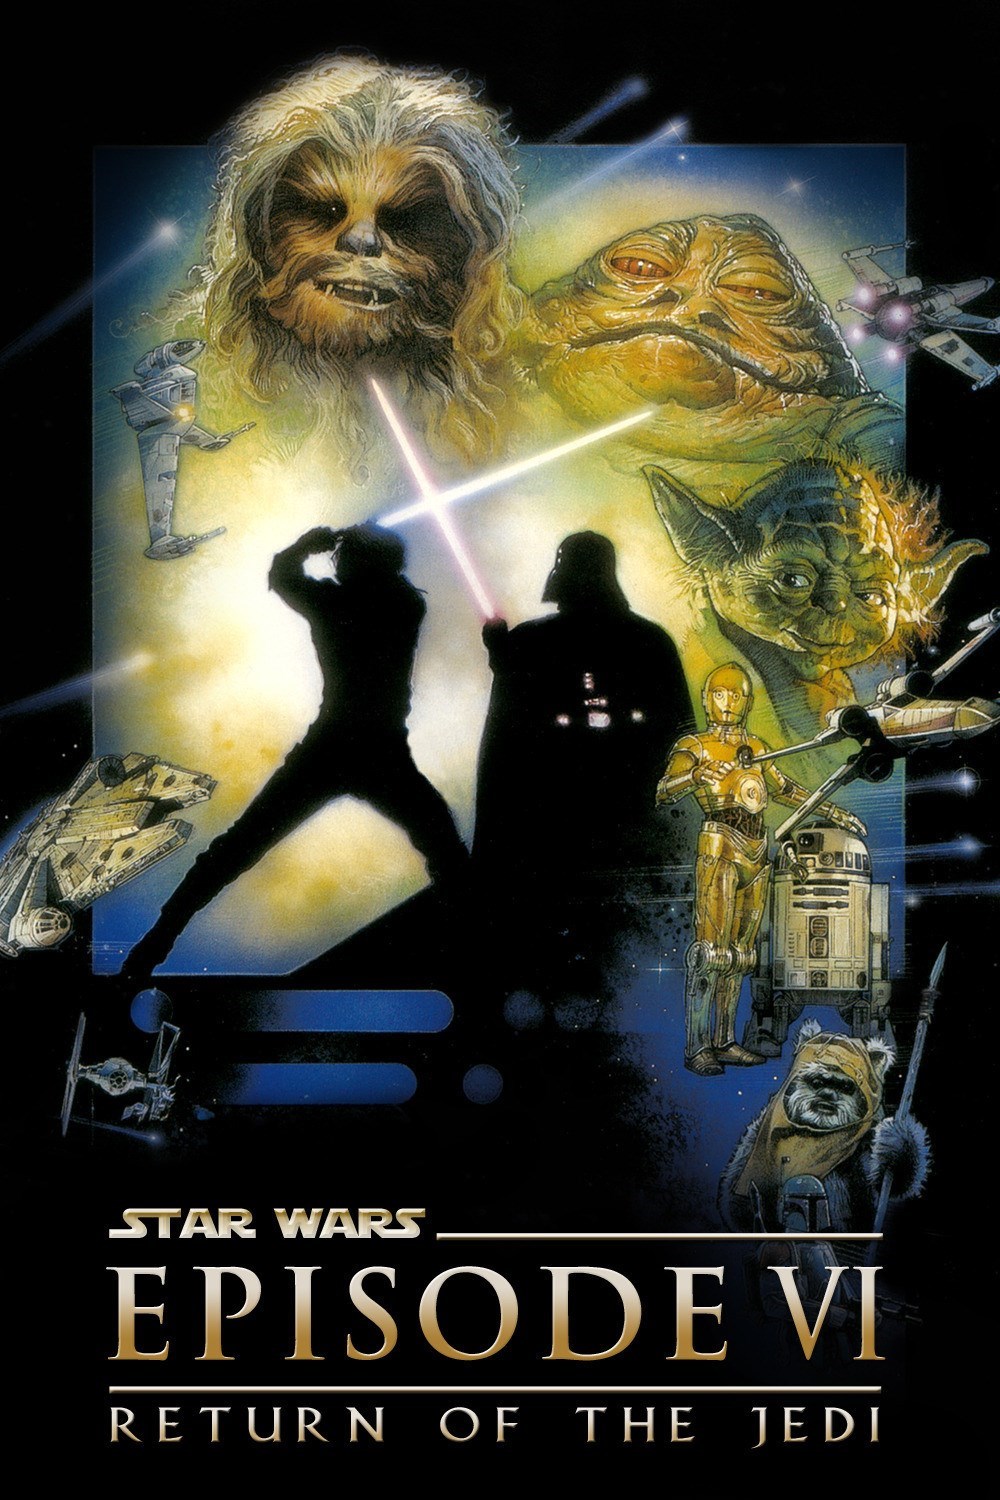 Star Wars Episode VI: Return of the Jedi 1983